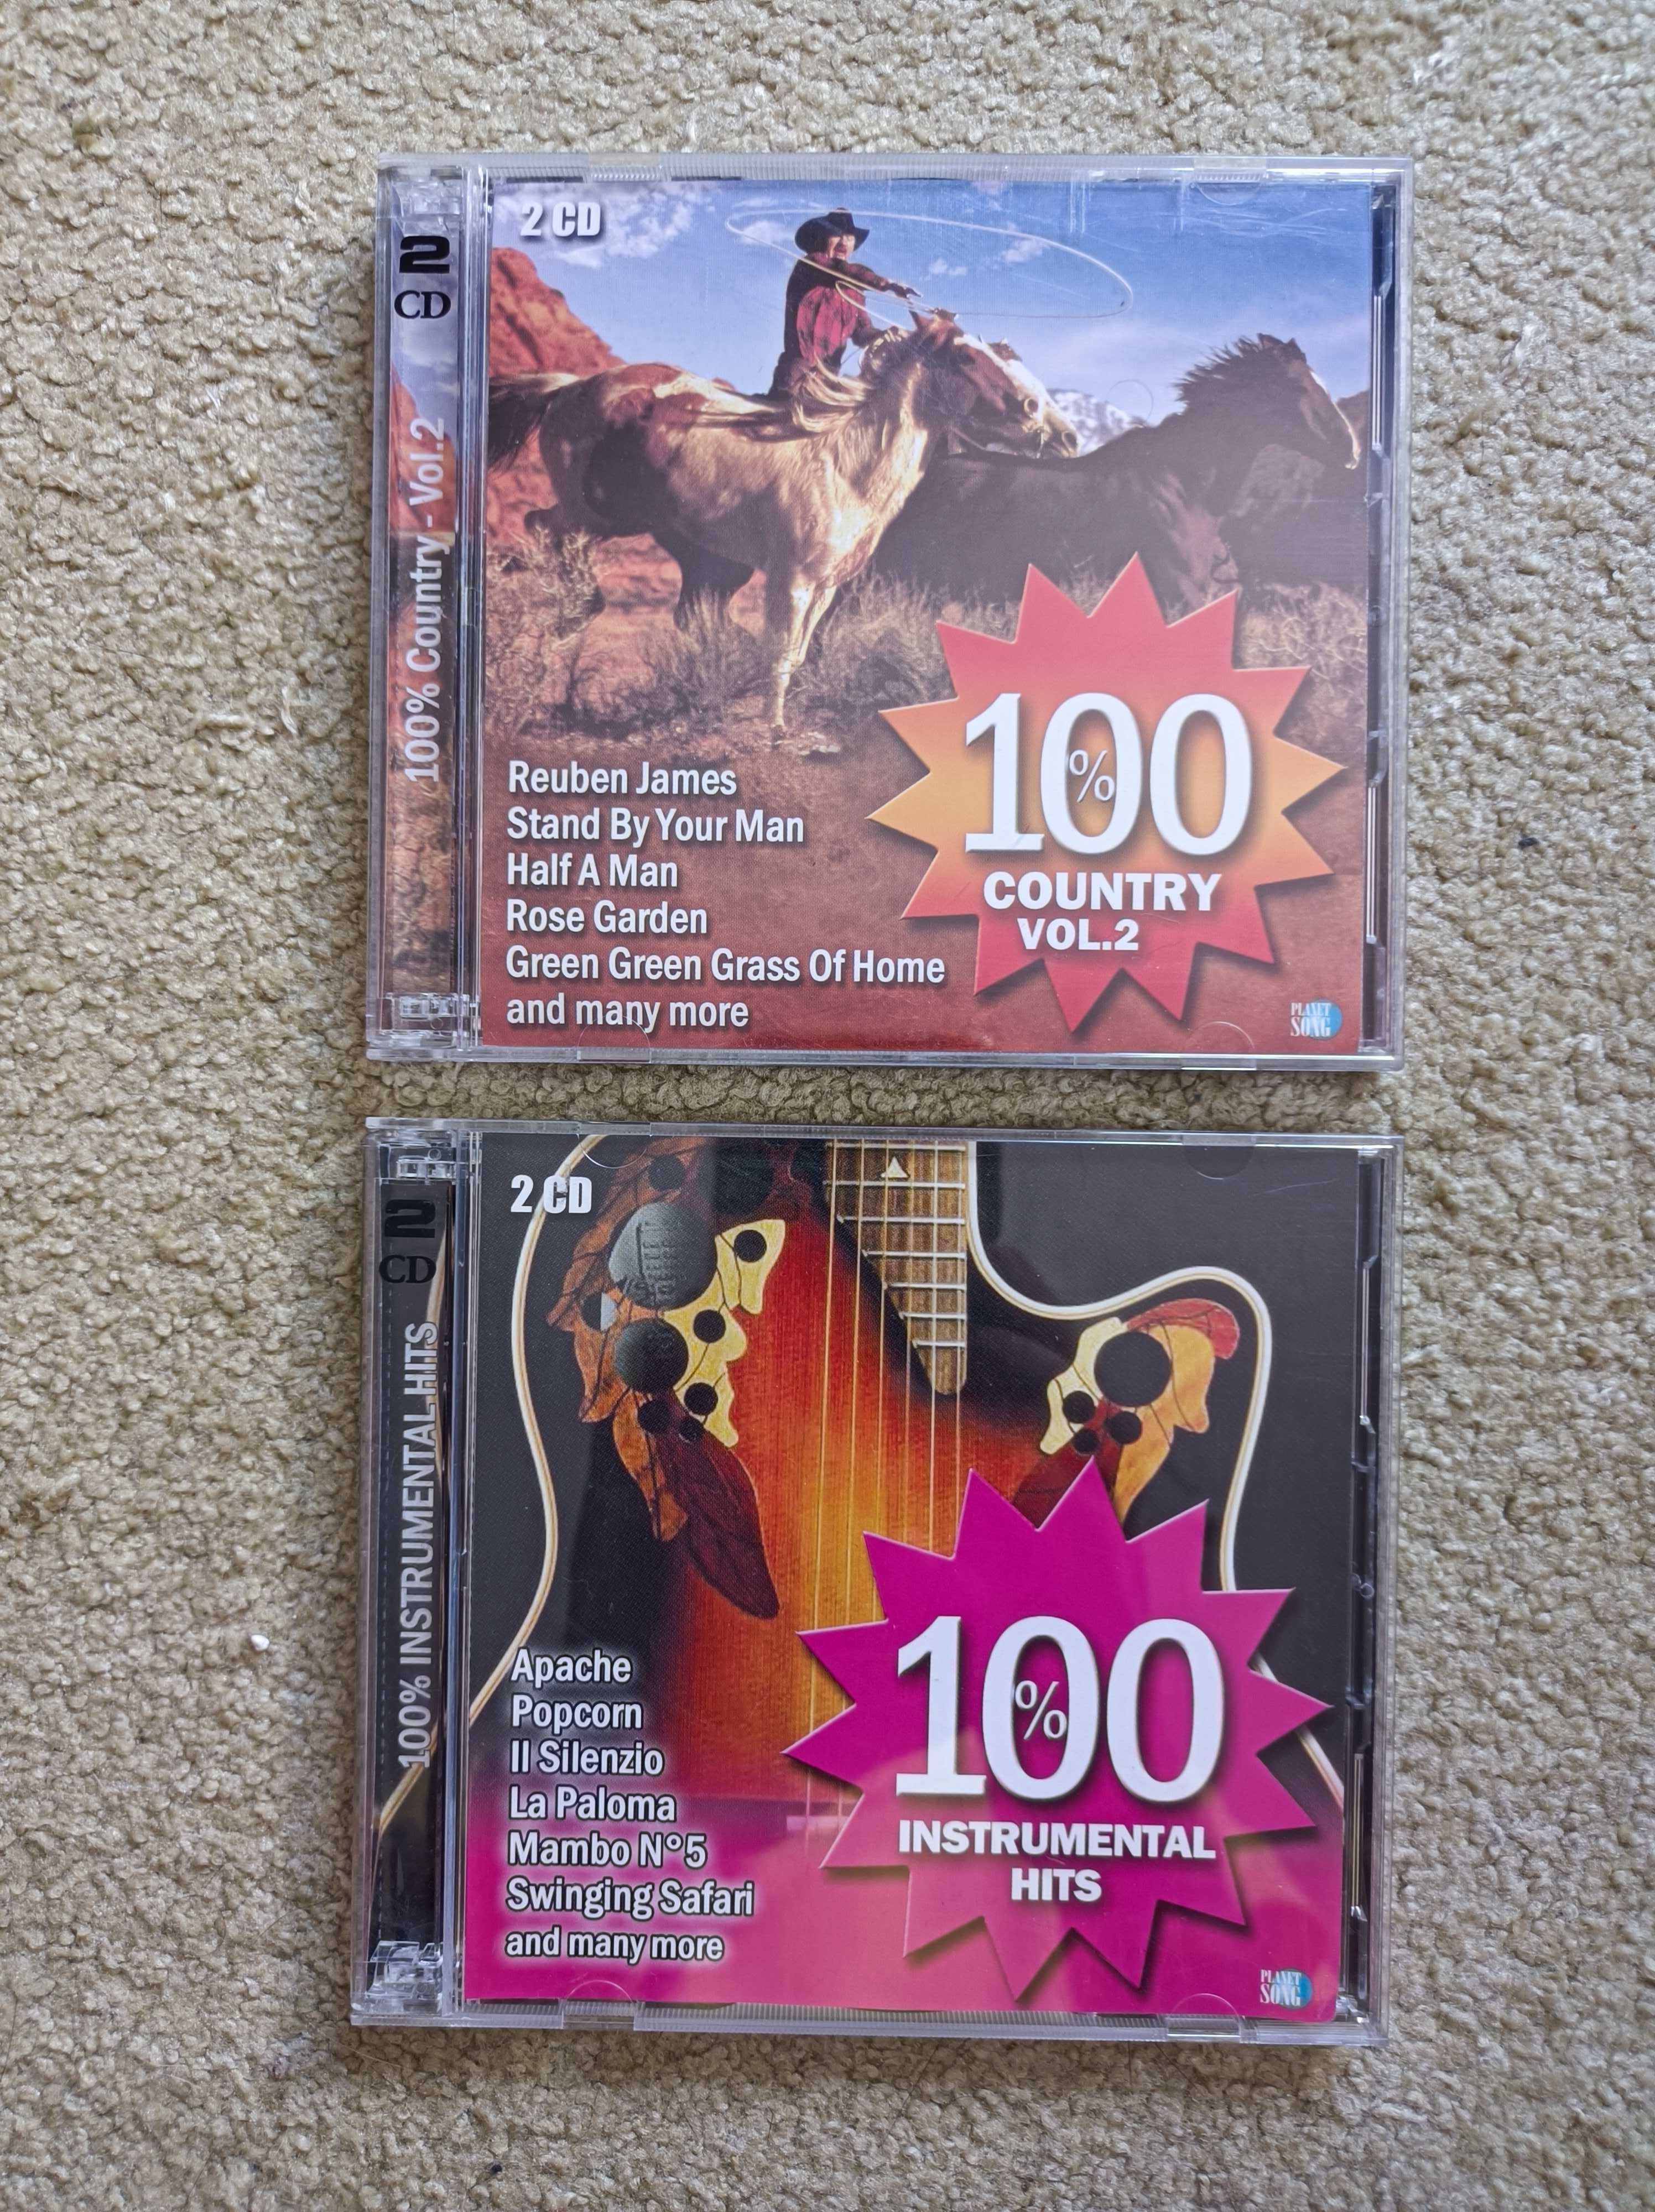 Cds 100% Country vol.2 (2CD) - 100% Instrumental Hits (2CD) - 5€/lote